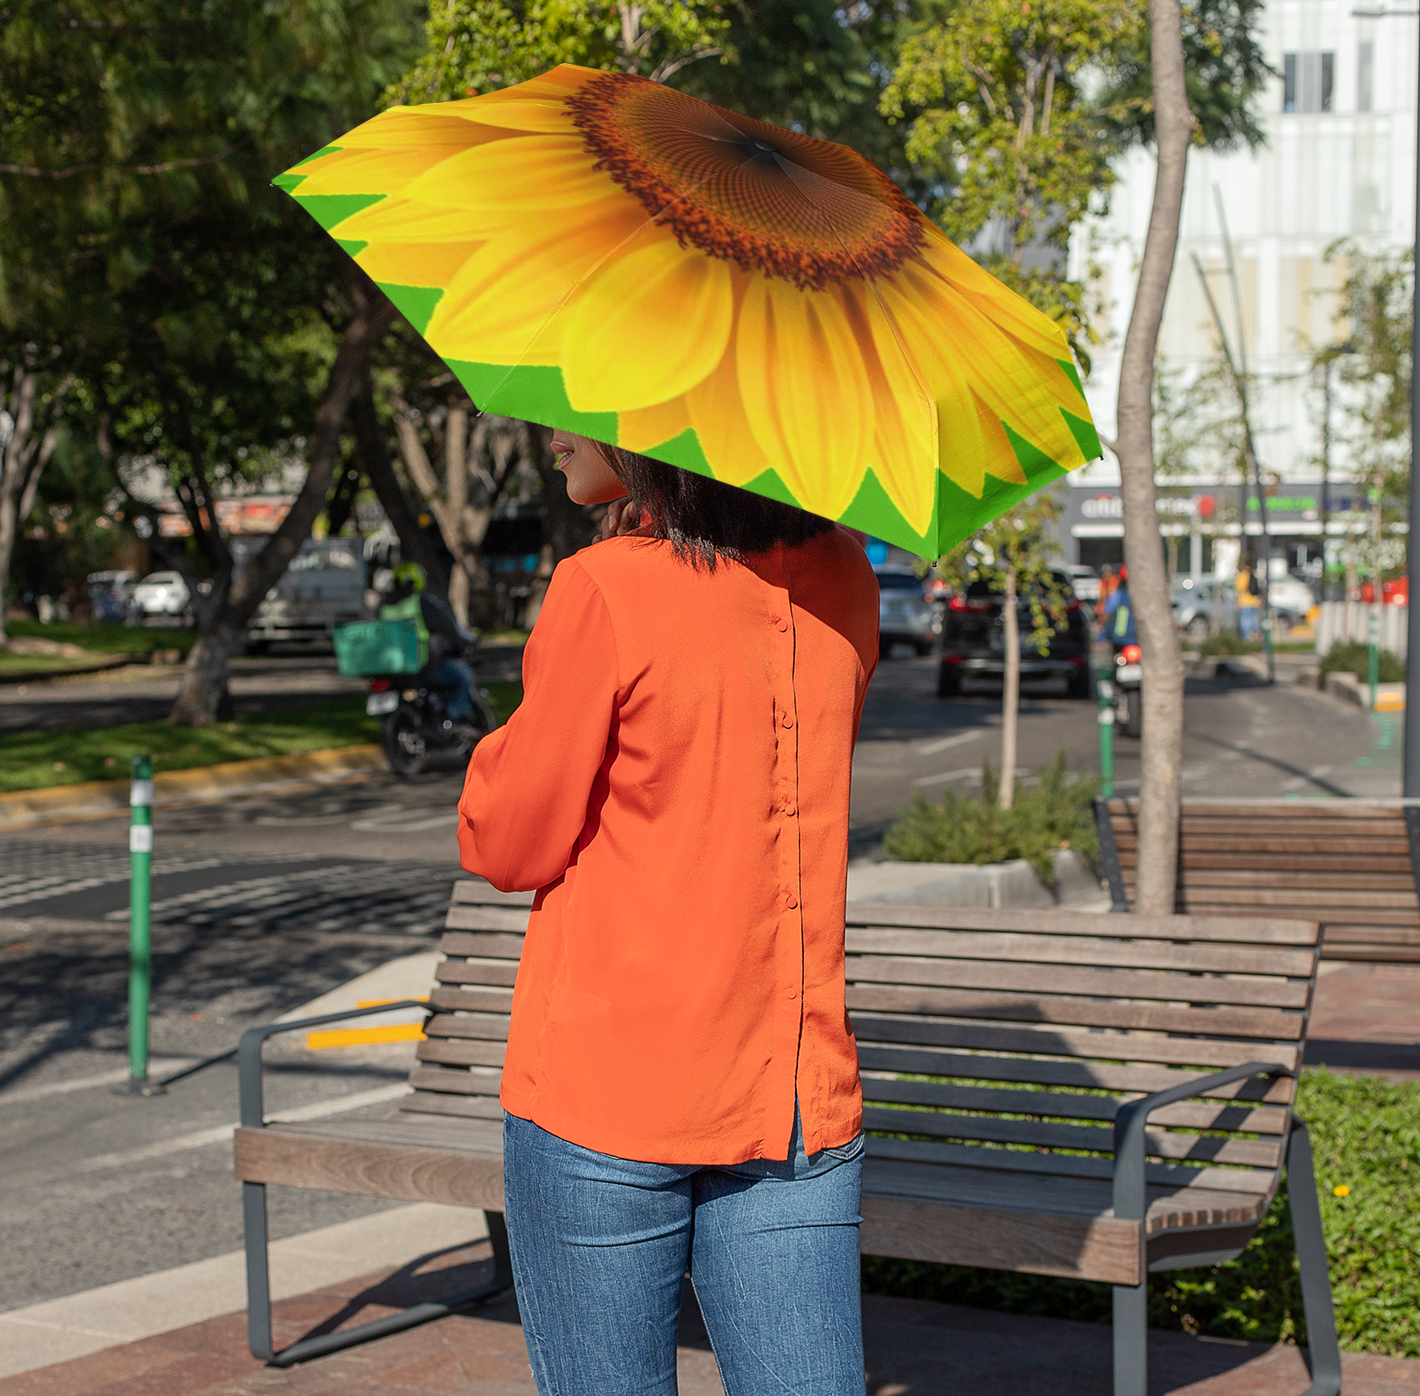 Sunflower Automatic Foldable Umbrella